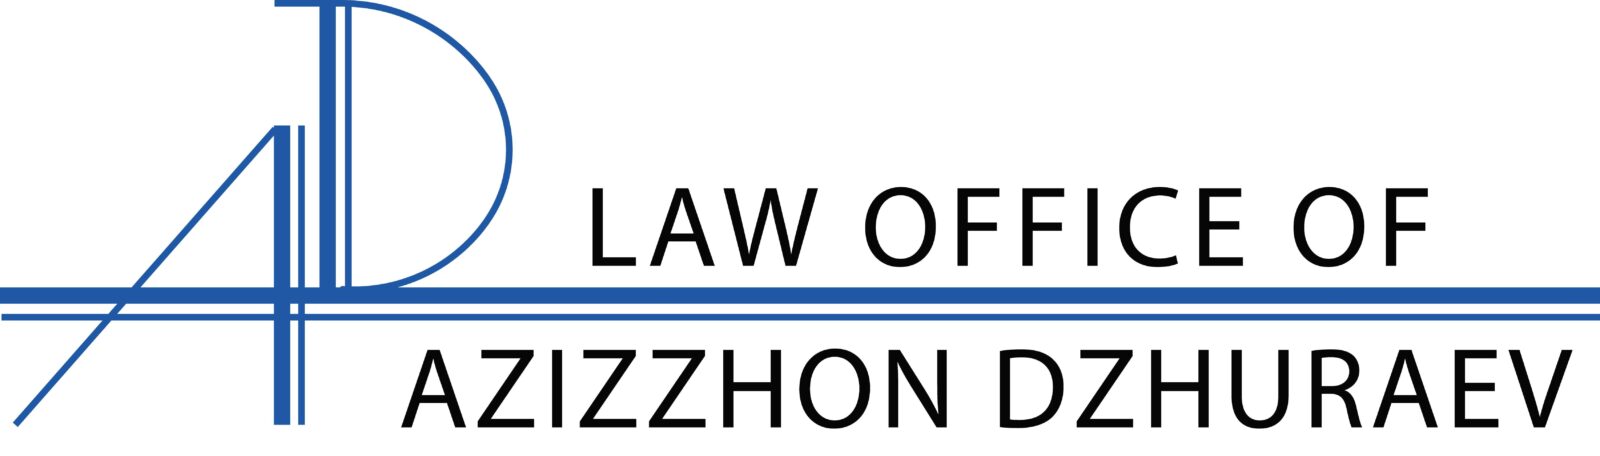 Law_Office